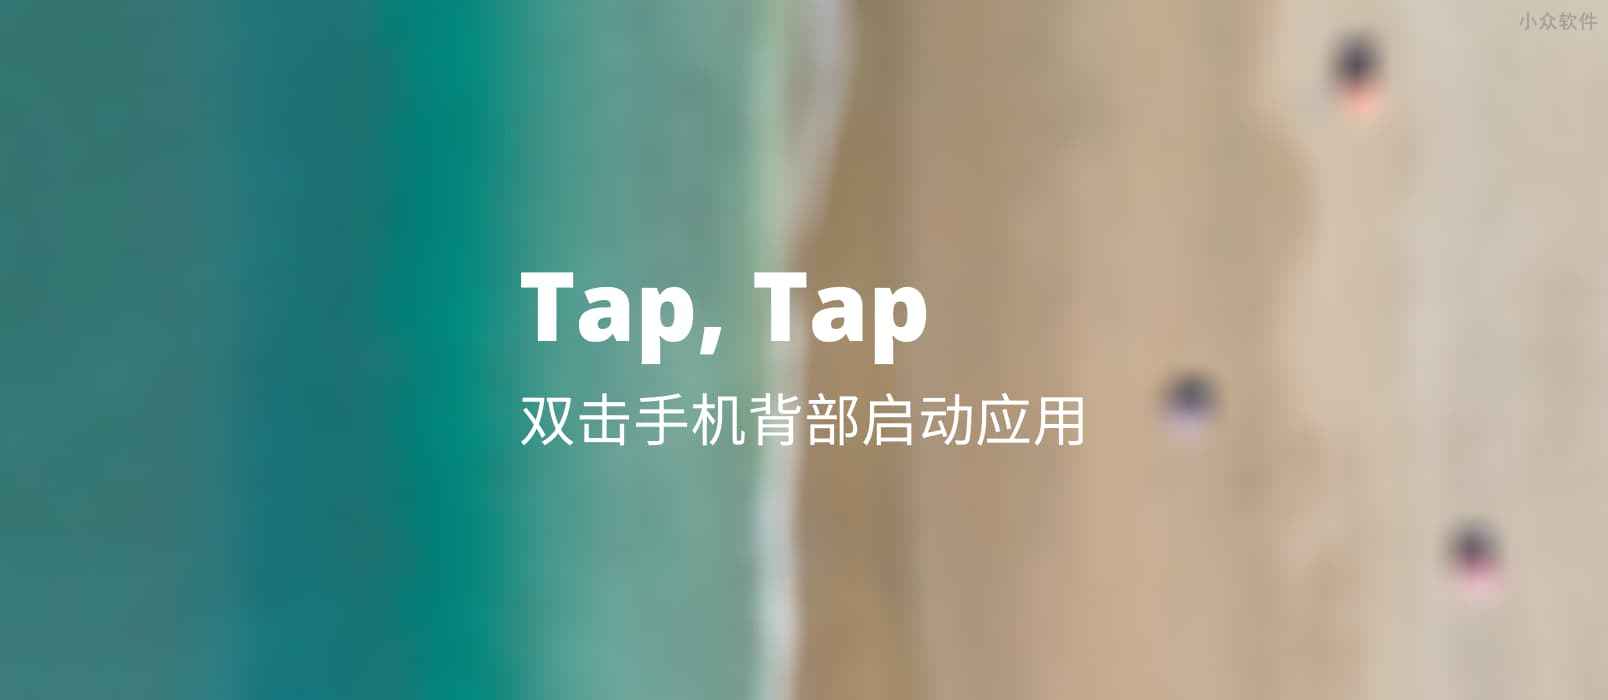 Tap, Tap - 双击背部启动 Android 应用，提前使用 iOS 14、Android 11 新功能 1